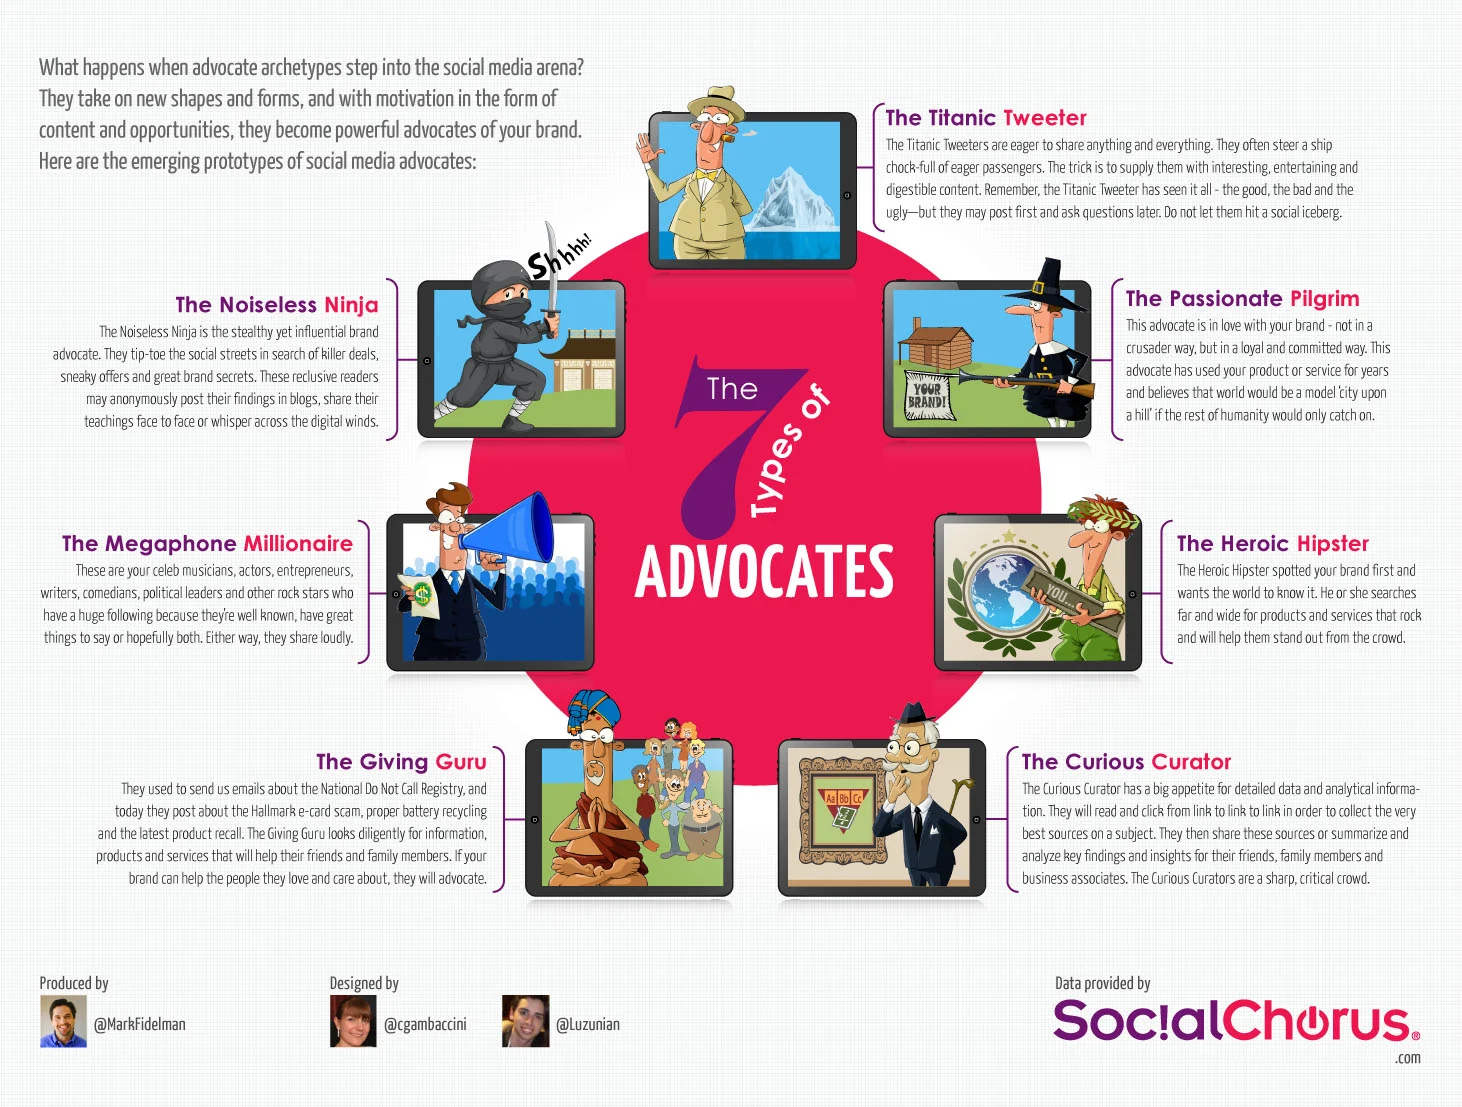 7 Prototypes Of Social Media Advocates [infographic]